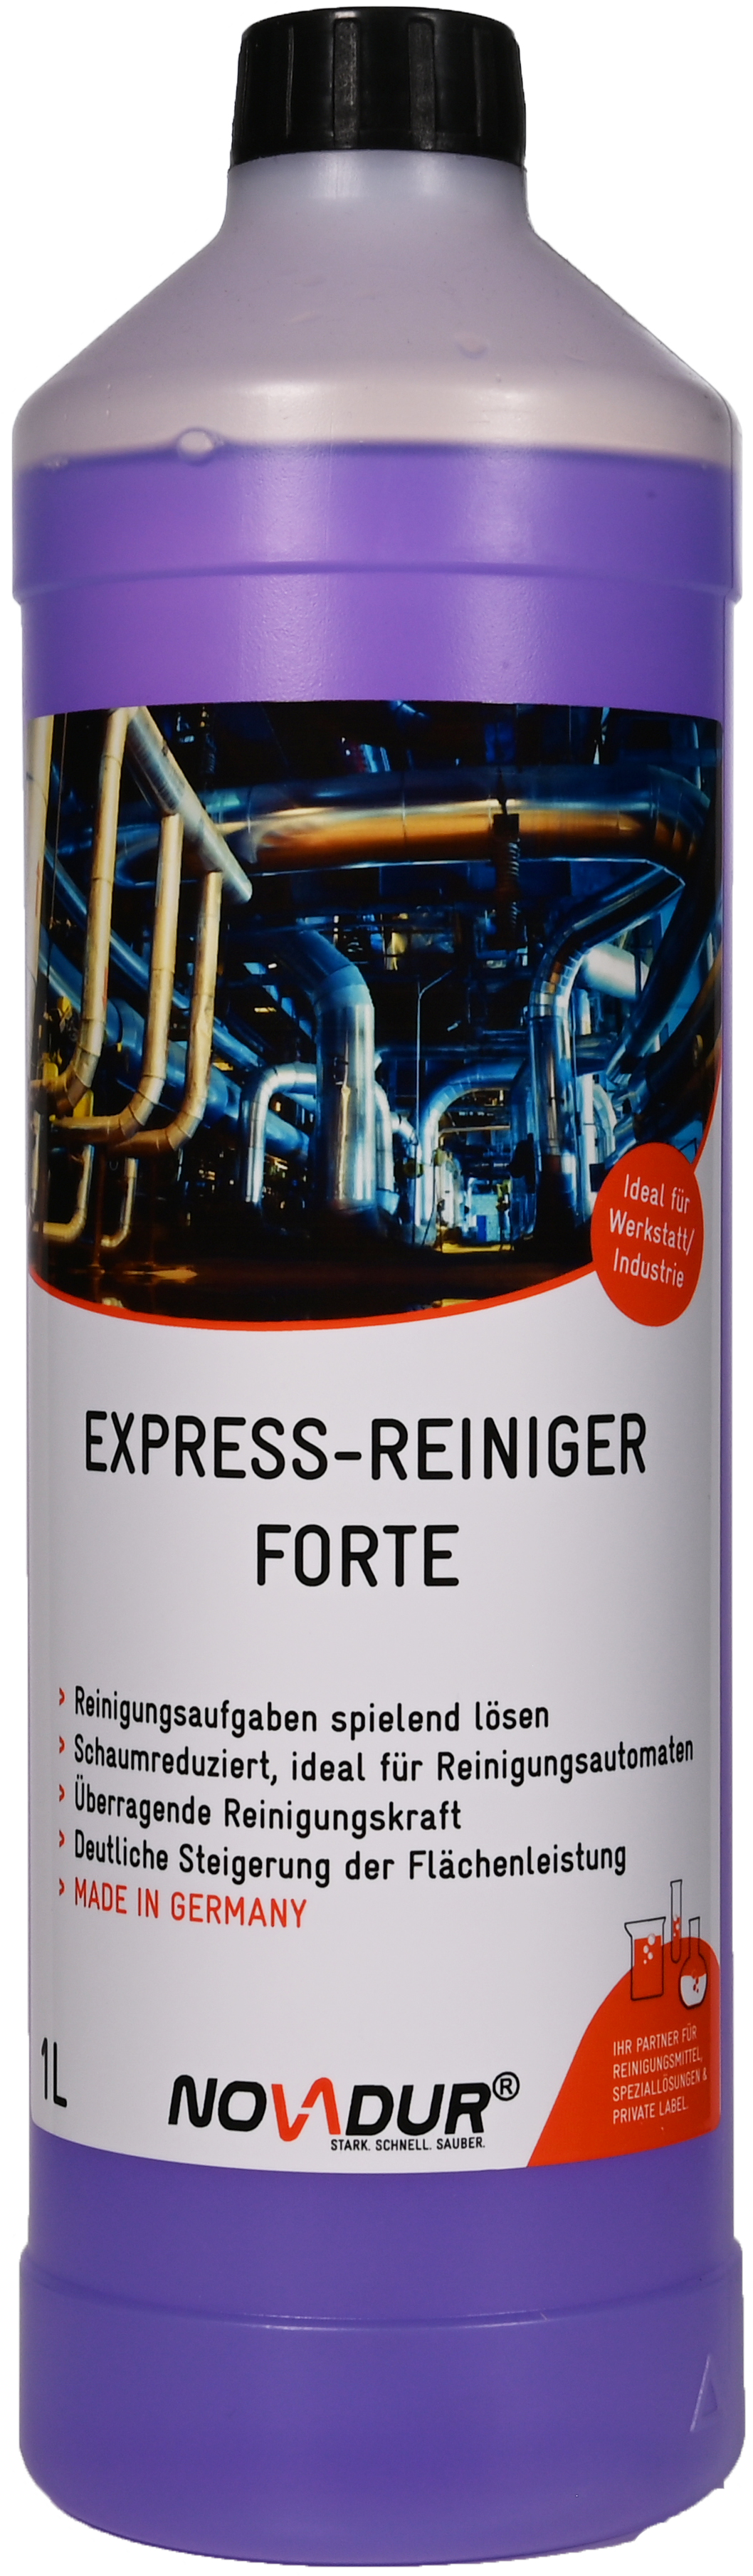 Express-Reiniger Forte (tensidfrei)